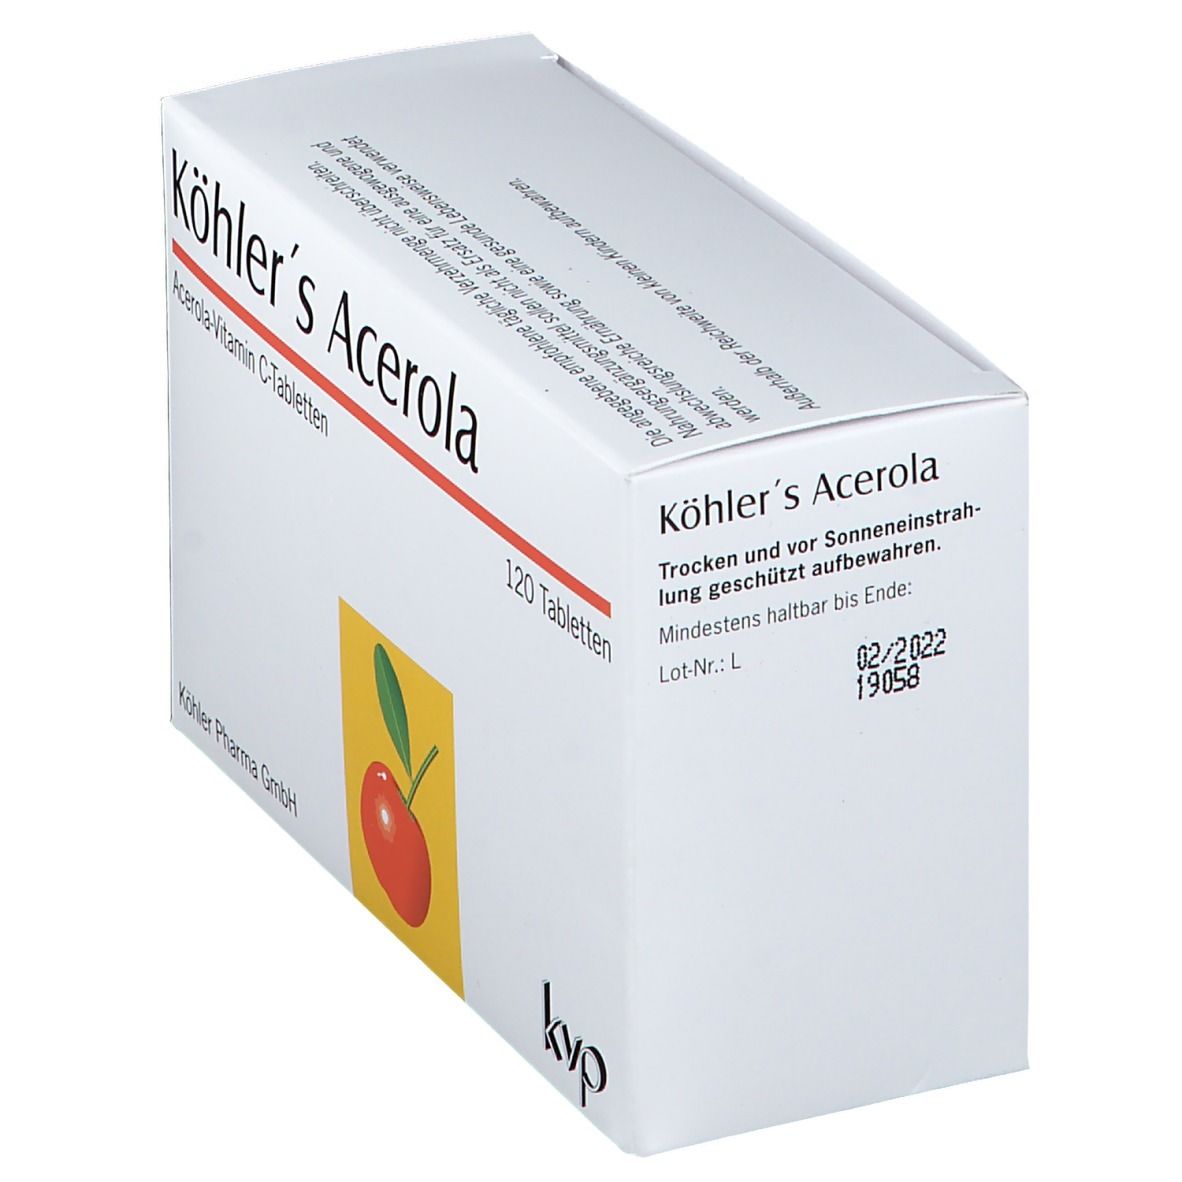 Köhlers Acerola Tabletten